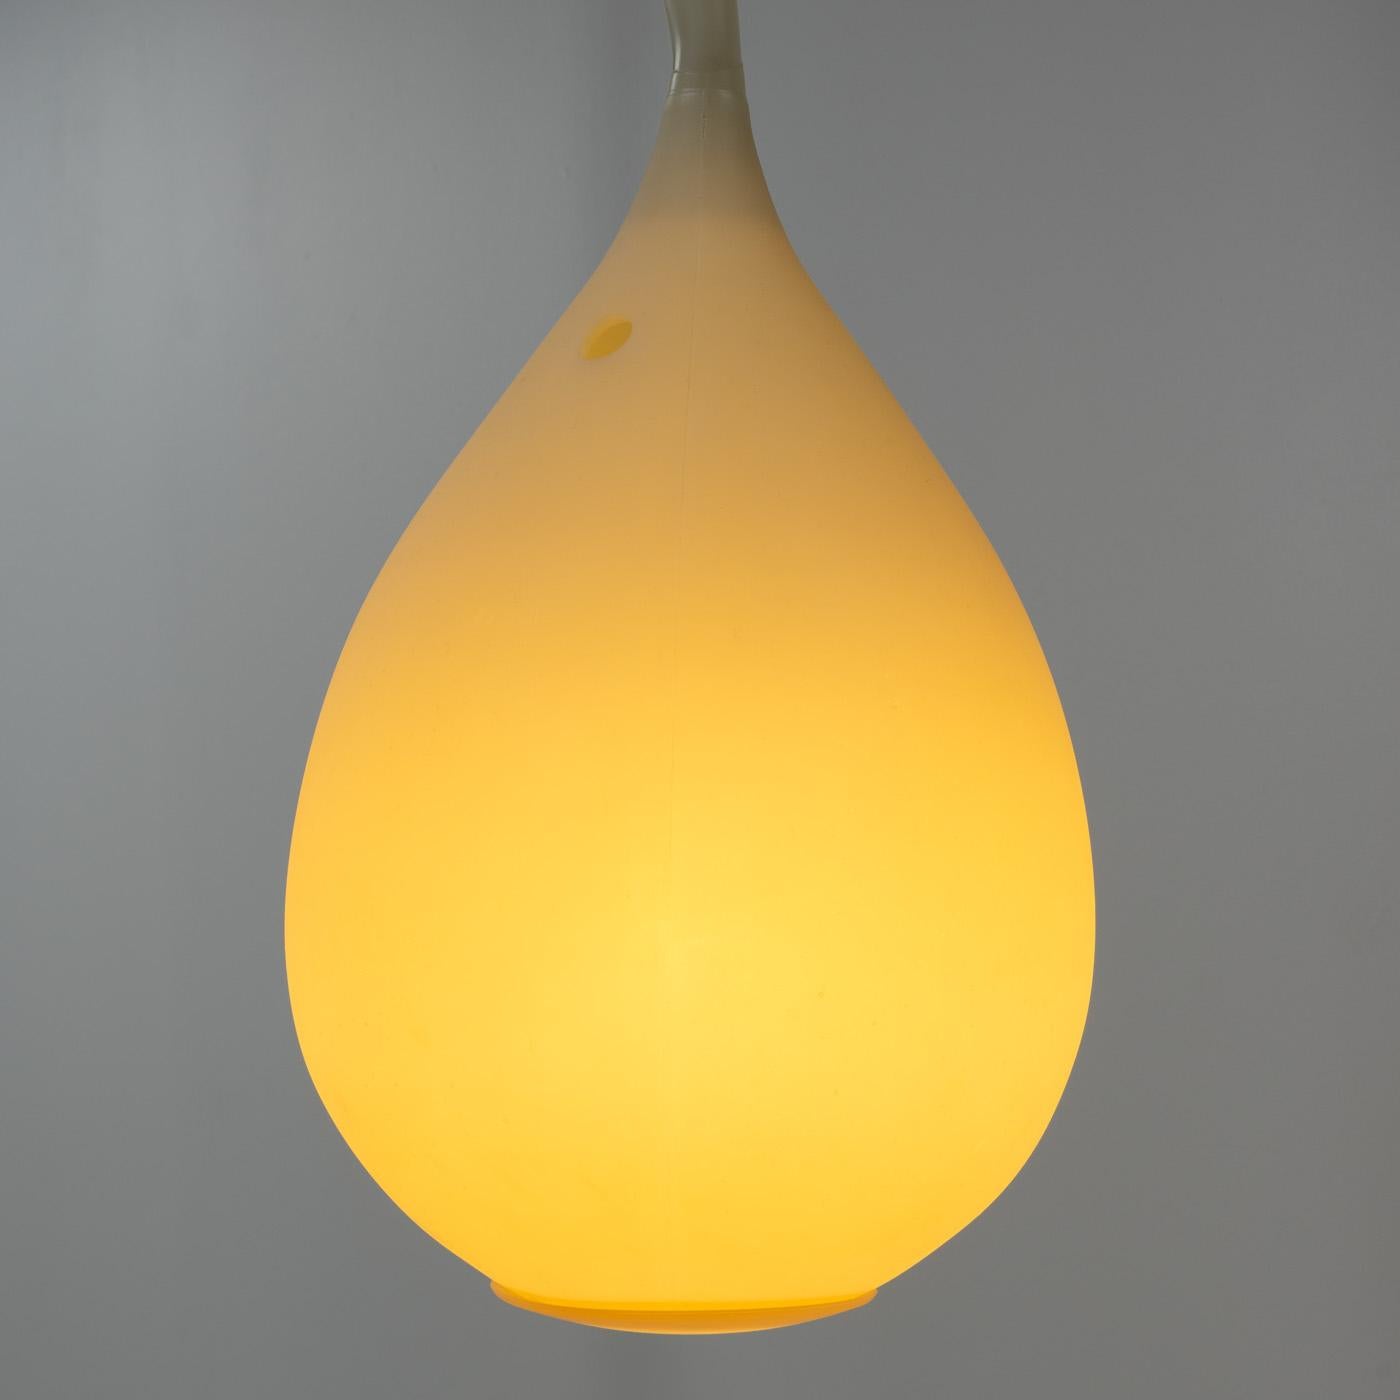 Rare Swiss Design Jingzi Ceiling Lamps, Herzog & De Meuron, for Belux, 2000s For Sale 6